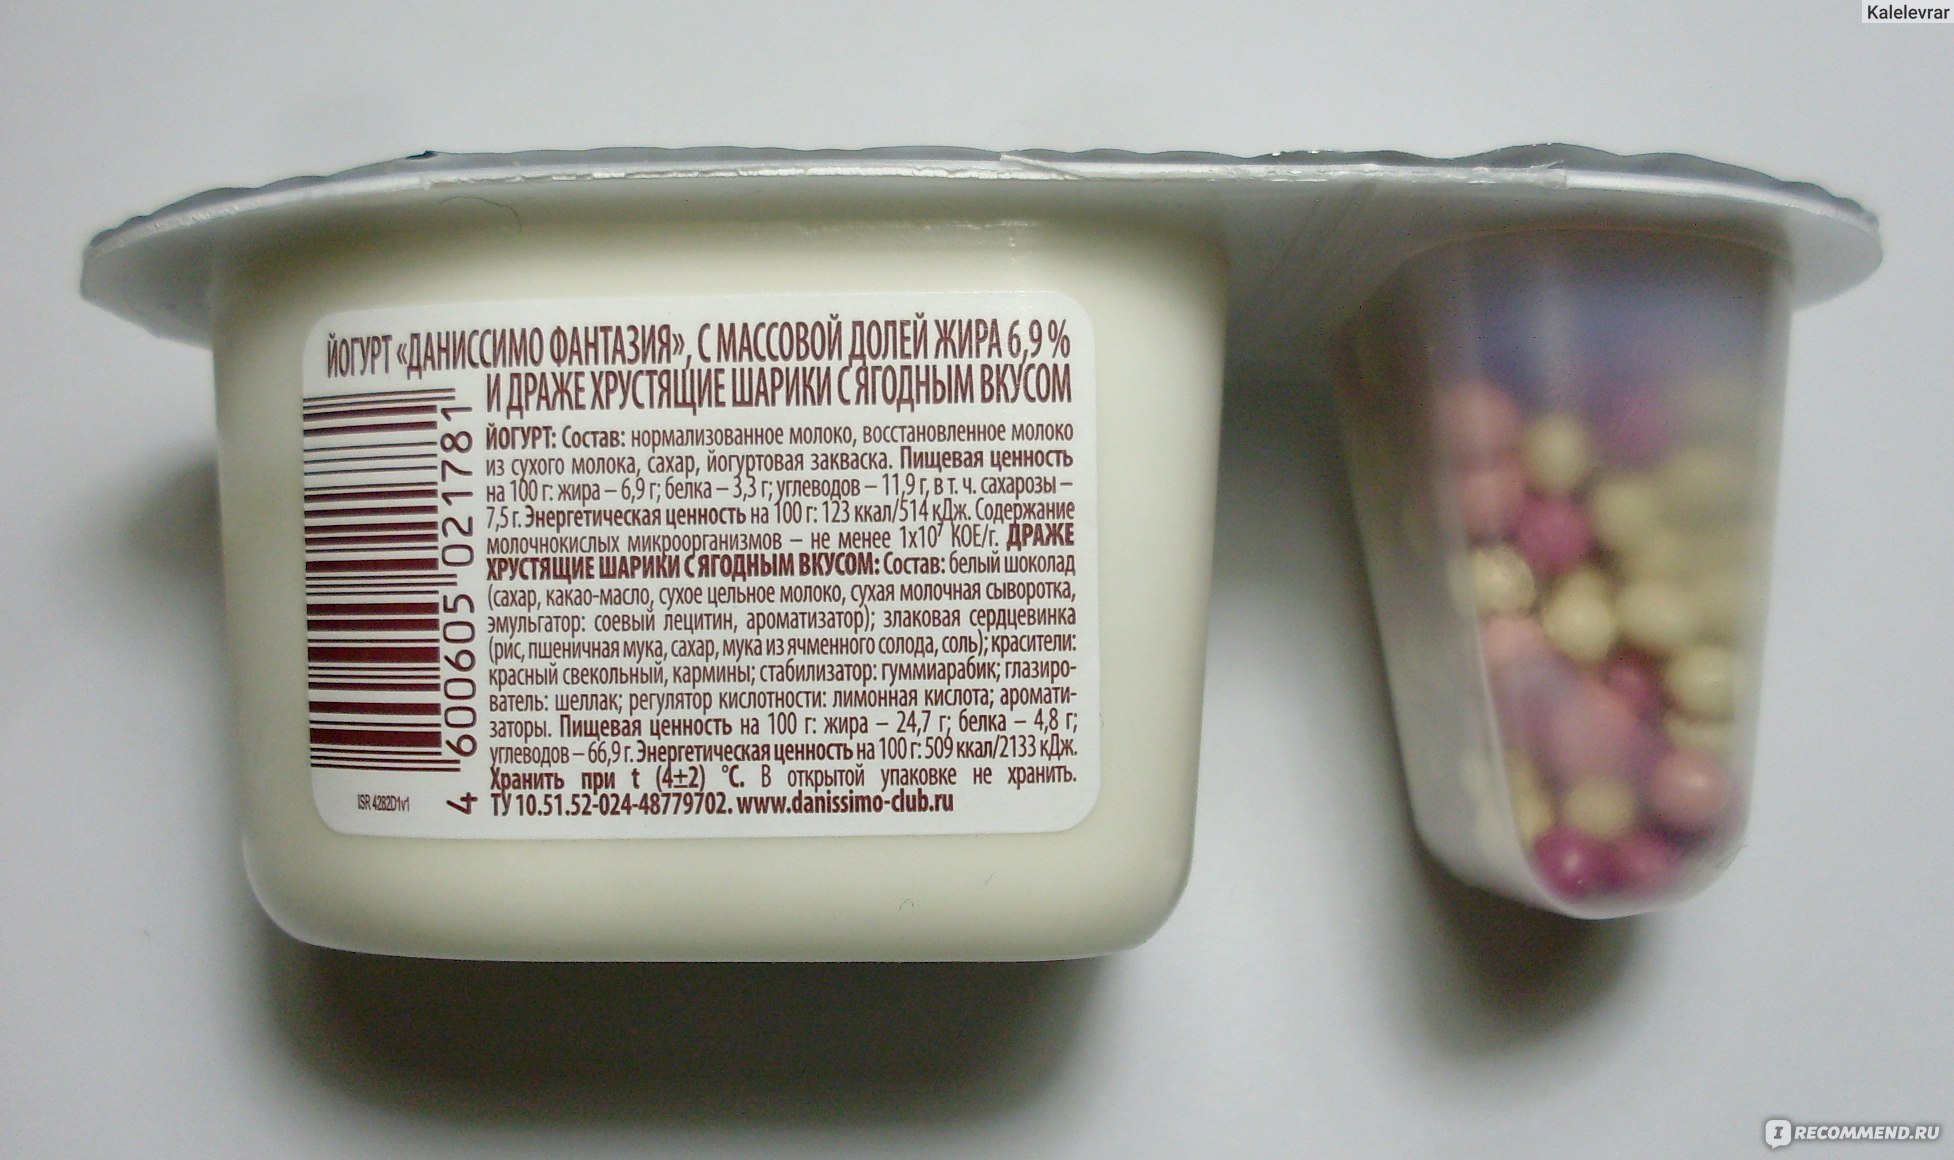 Йогурт данон с шариками фото